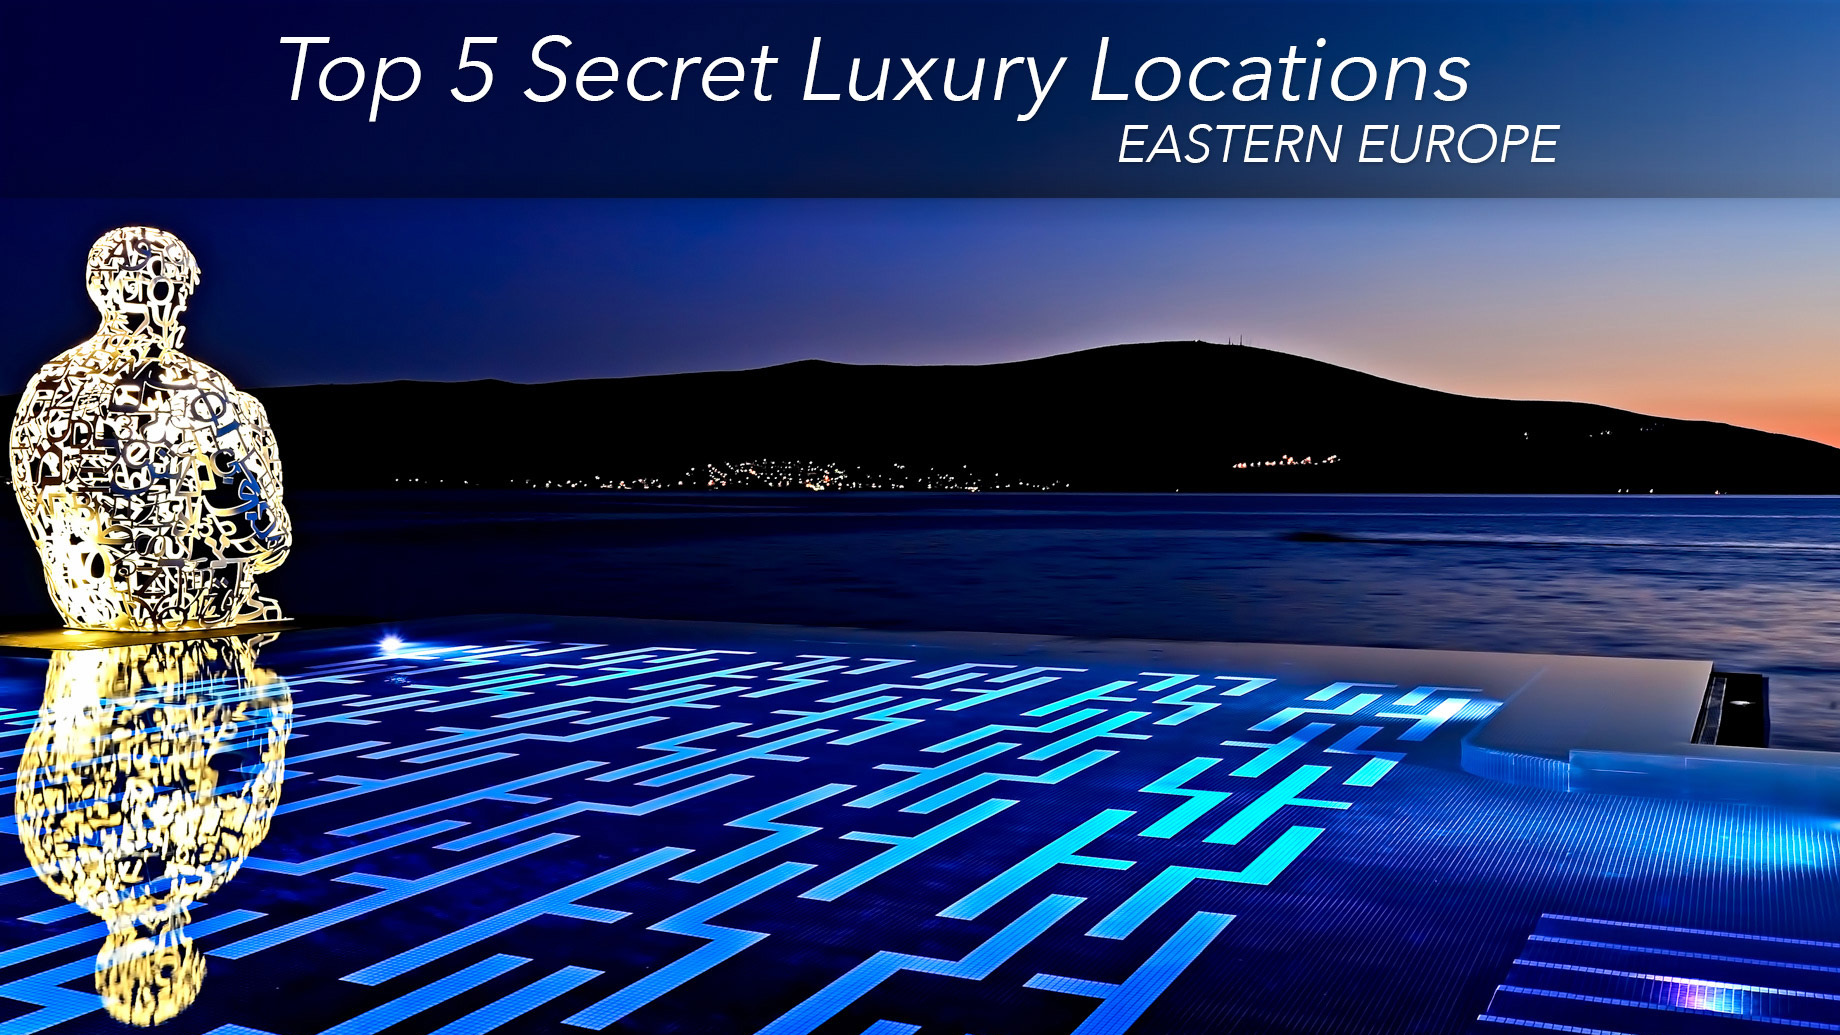 Top 5 Secret Luxury Locations in Eastern Europe